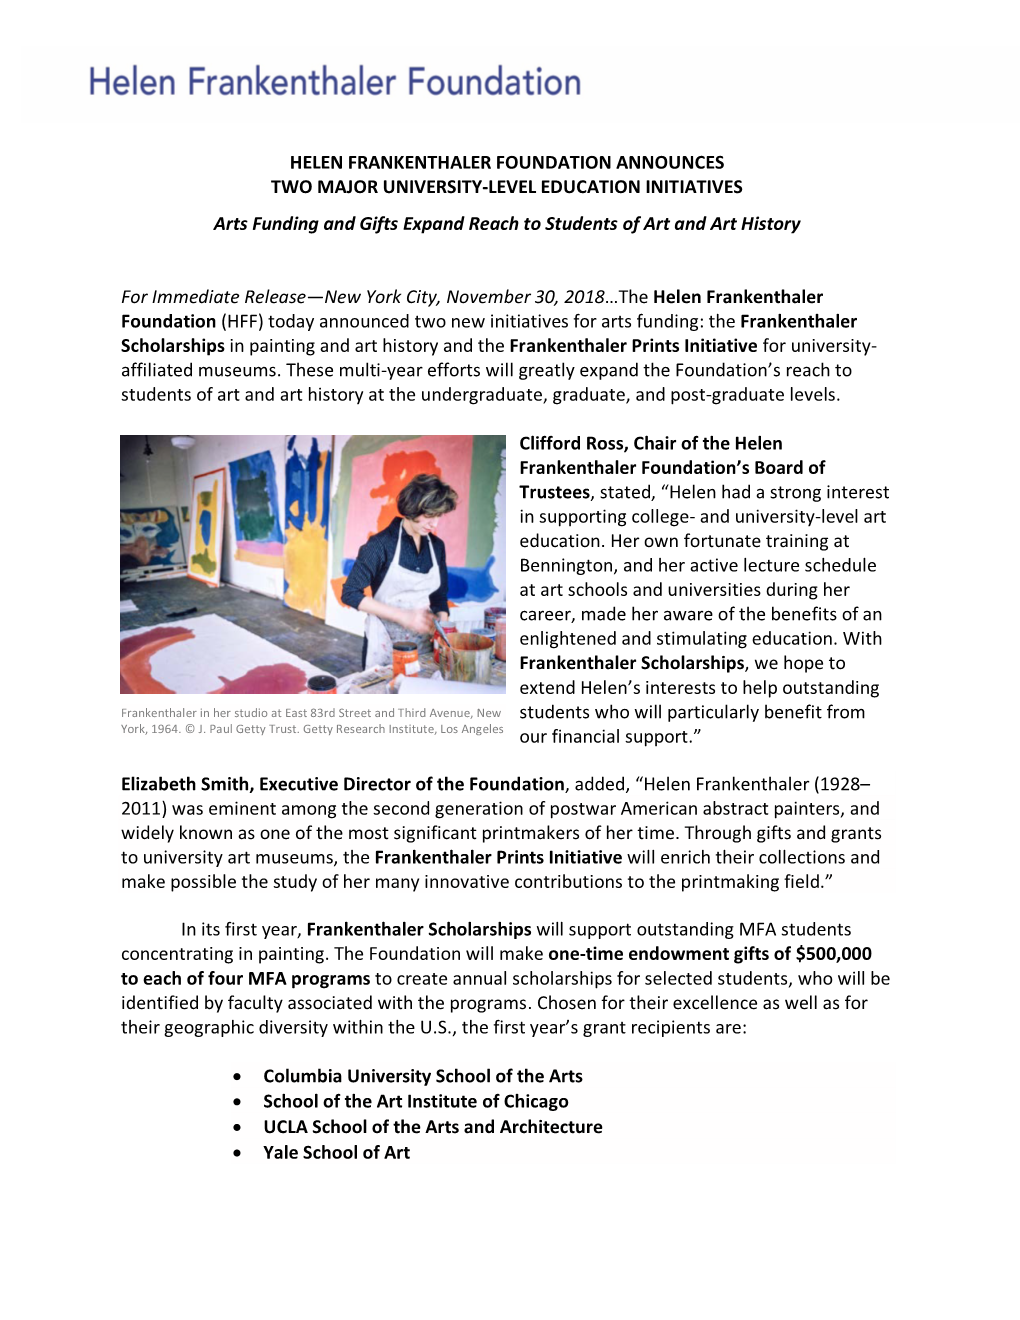 Frankenthaler Prints Initiative for University- Affiliated Museums